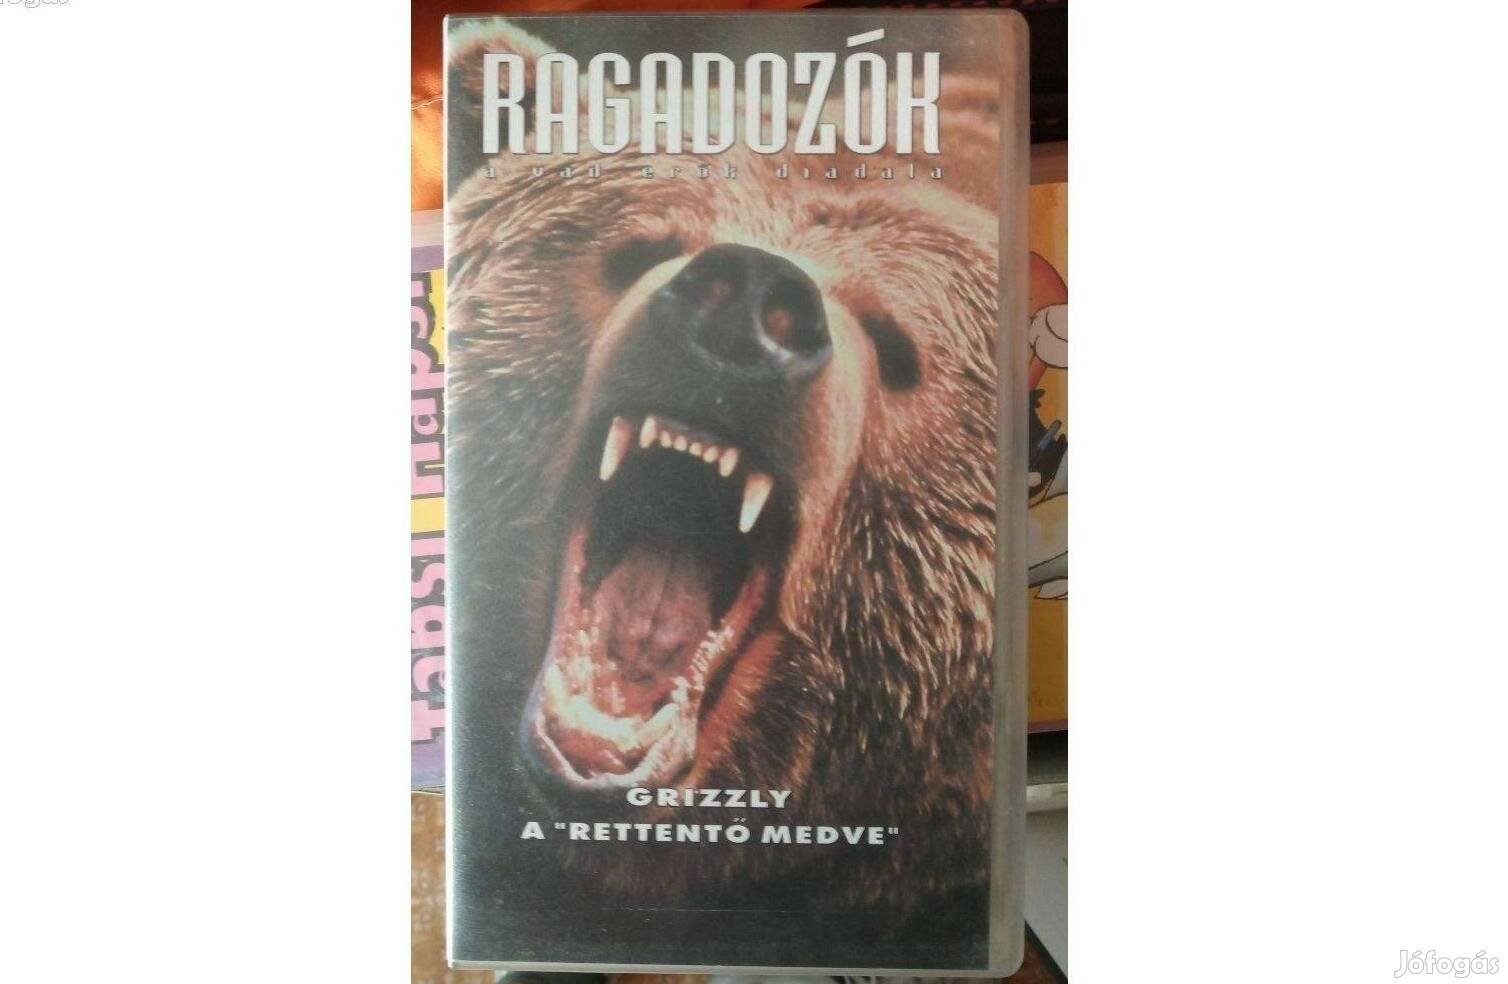 Ragadozók VHS Grizzly, a "rettentő medve". Debrecenben